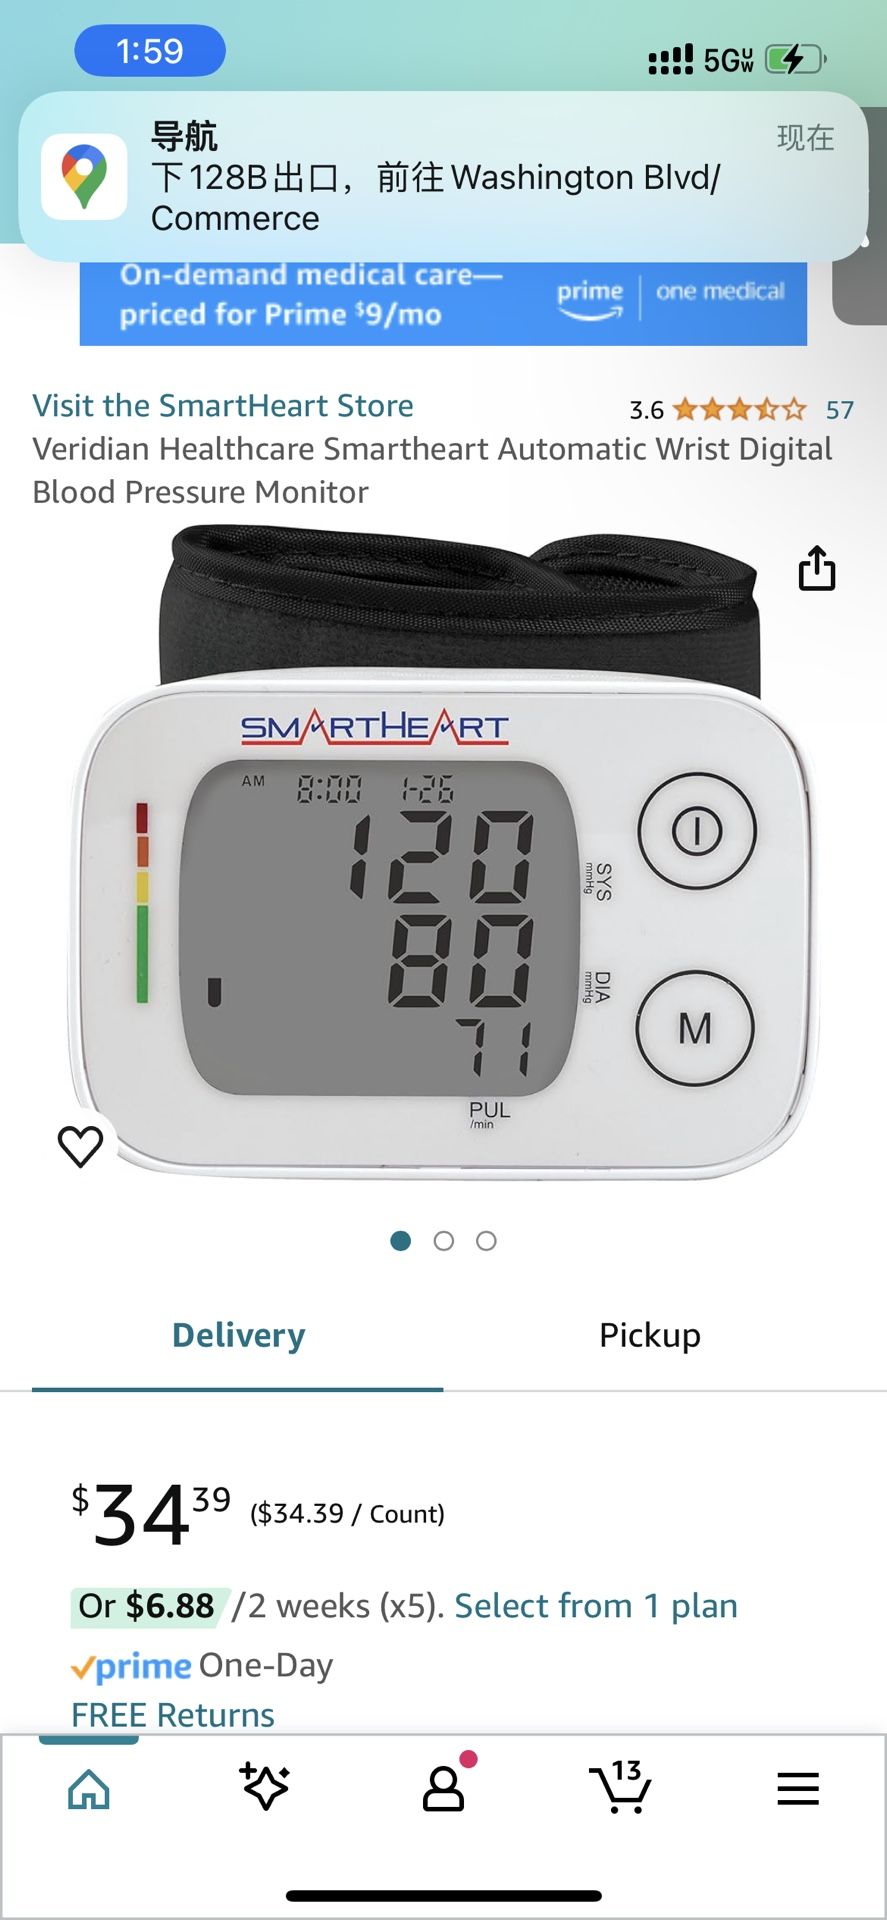 Veridian Healthcare Smartheart Automatic Wrist Digital Blood Pressure Monitor